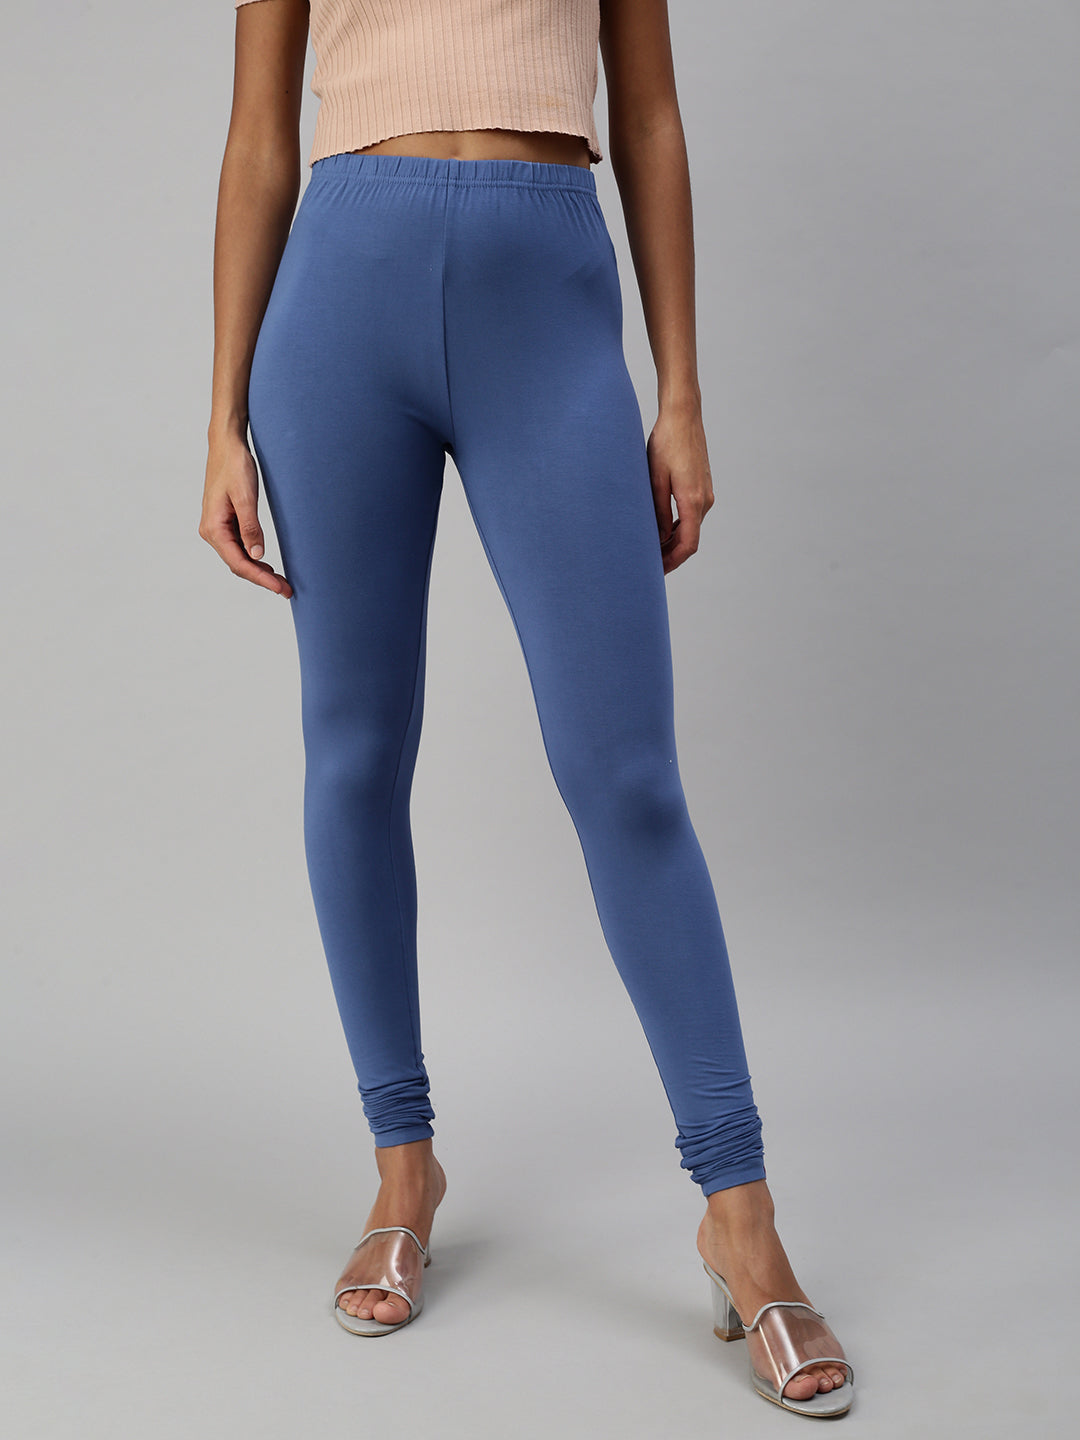 Prisma's Innovative Leggings | Stylish leggings, Clothes, Online shopping  stores